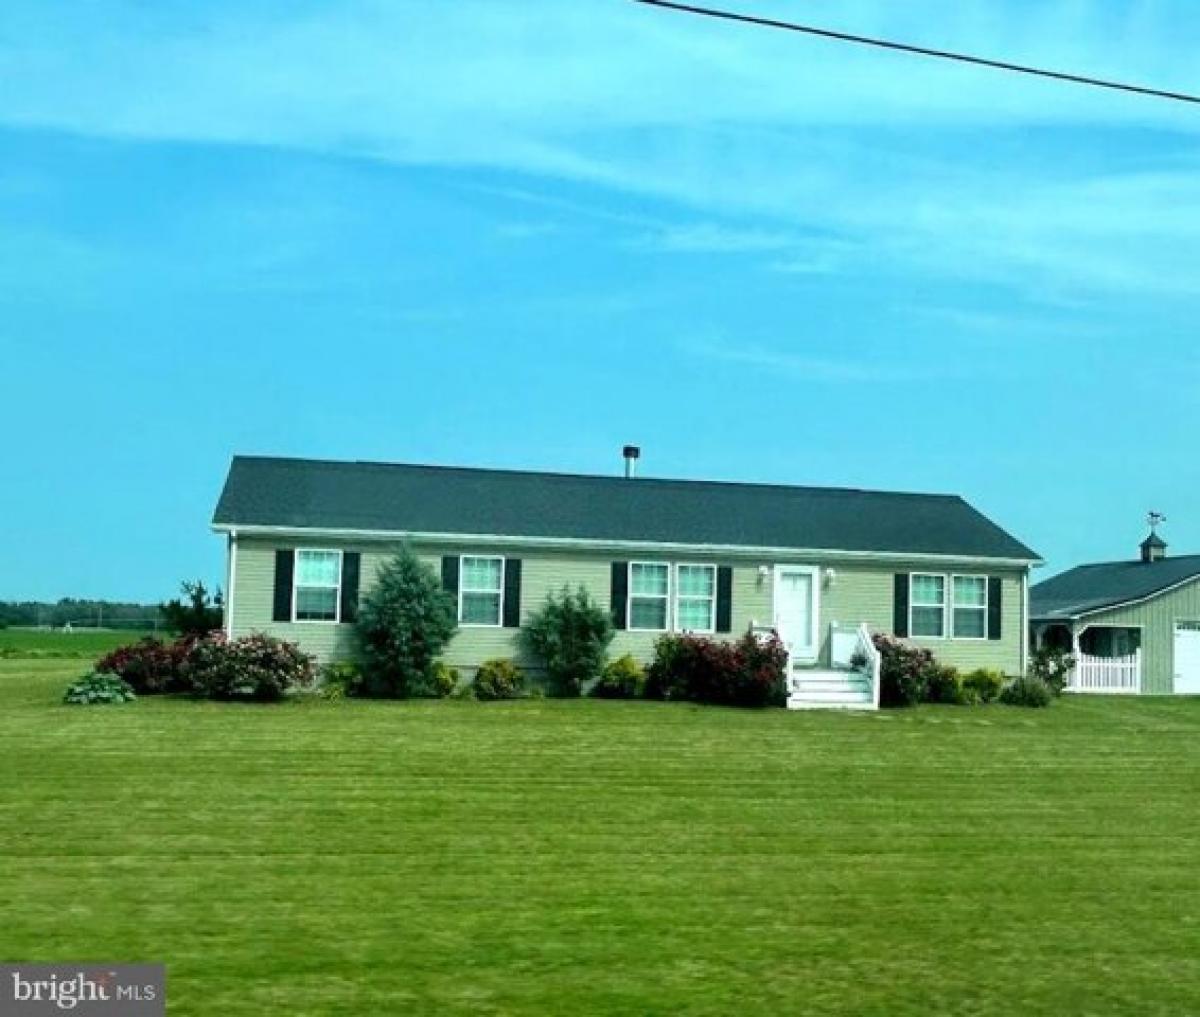 Picture of Home For Sale in Bridgeville, Delaware, United States